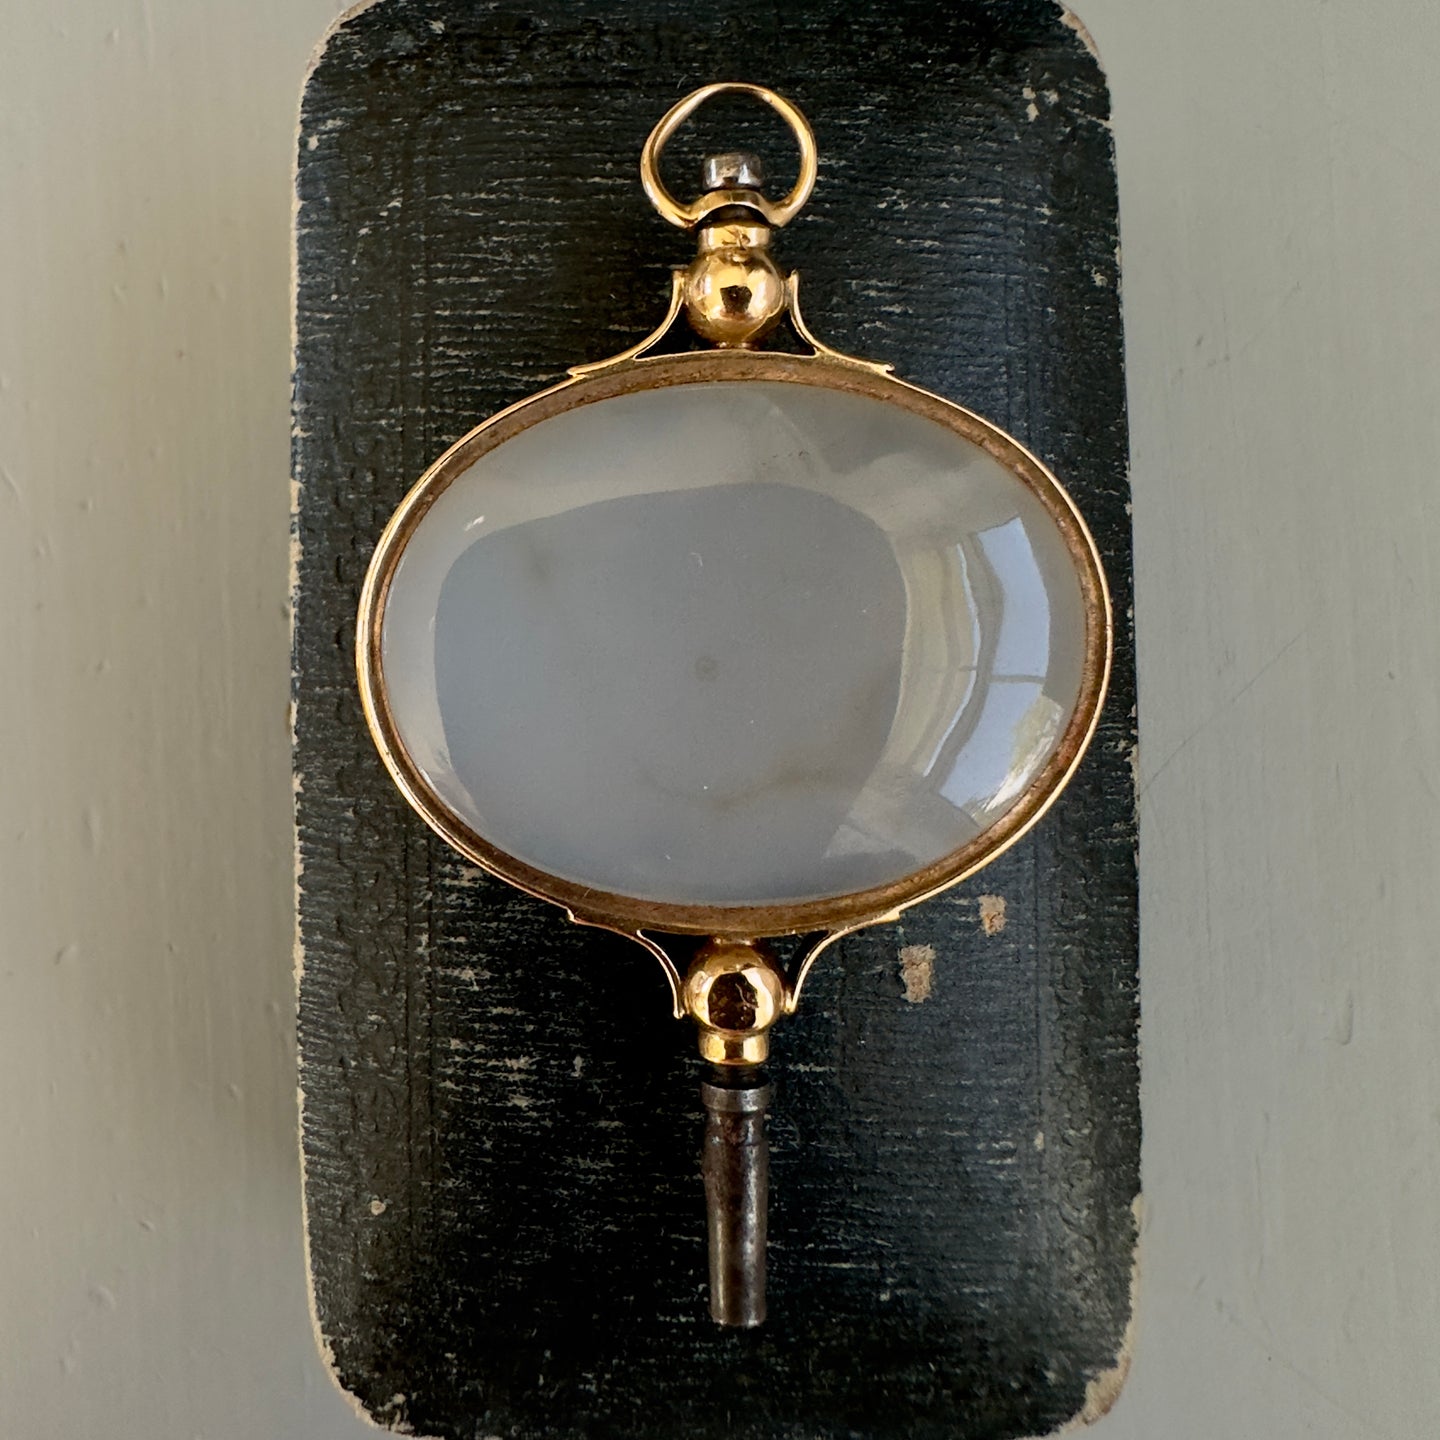 Agate Watch Key Pendant